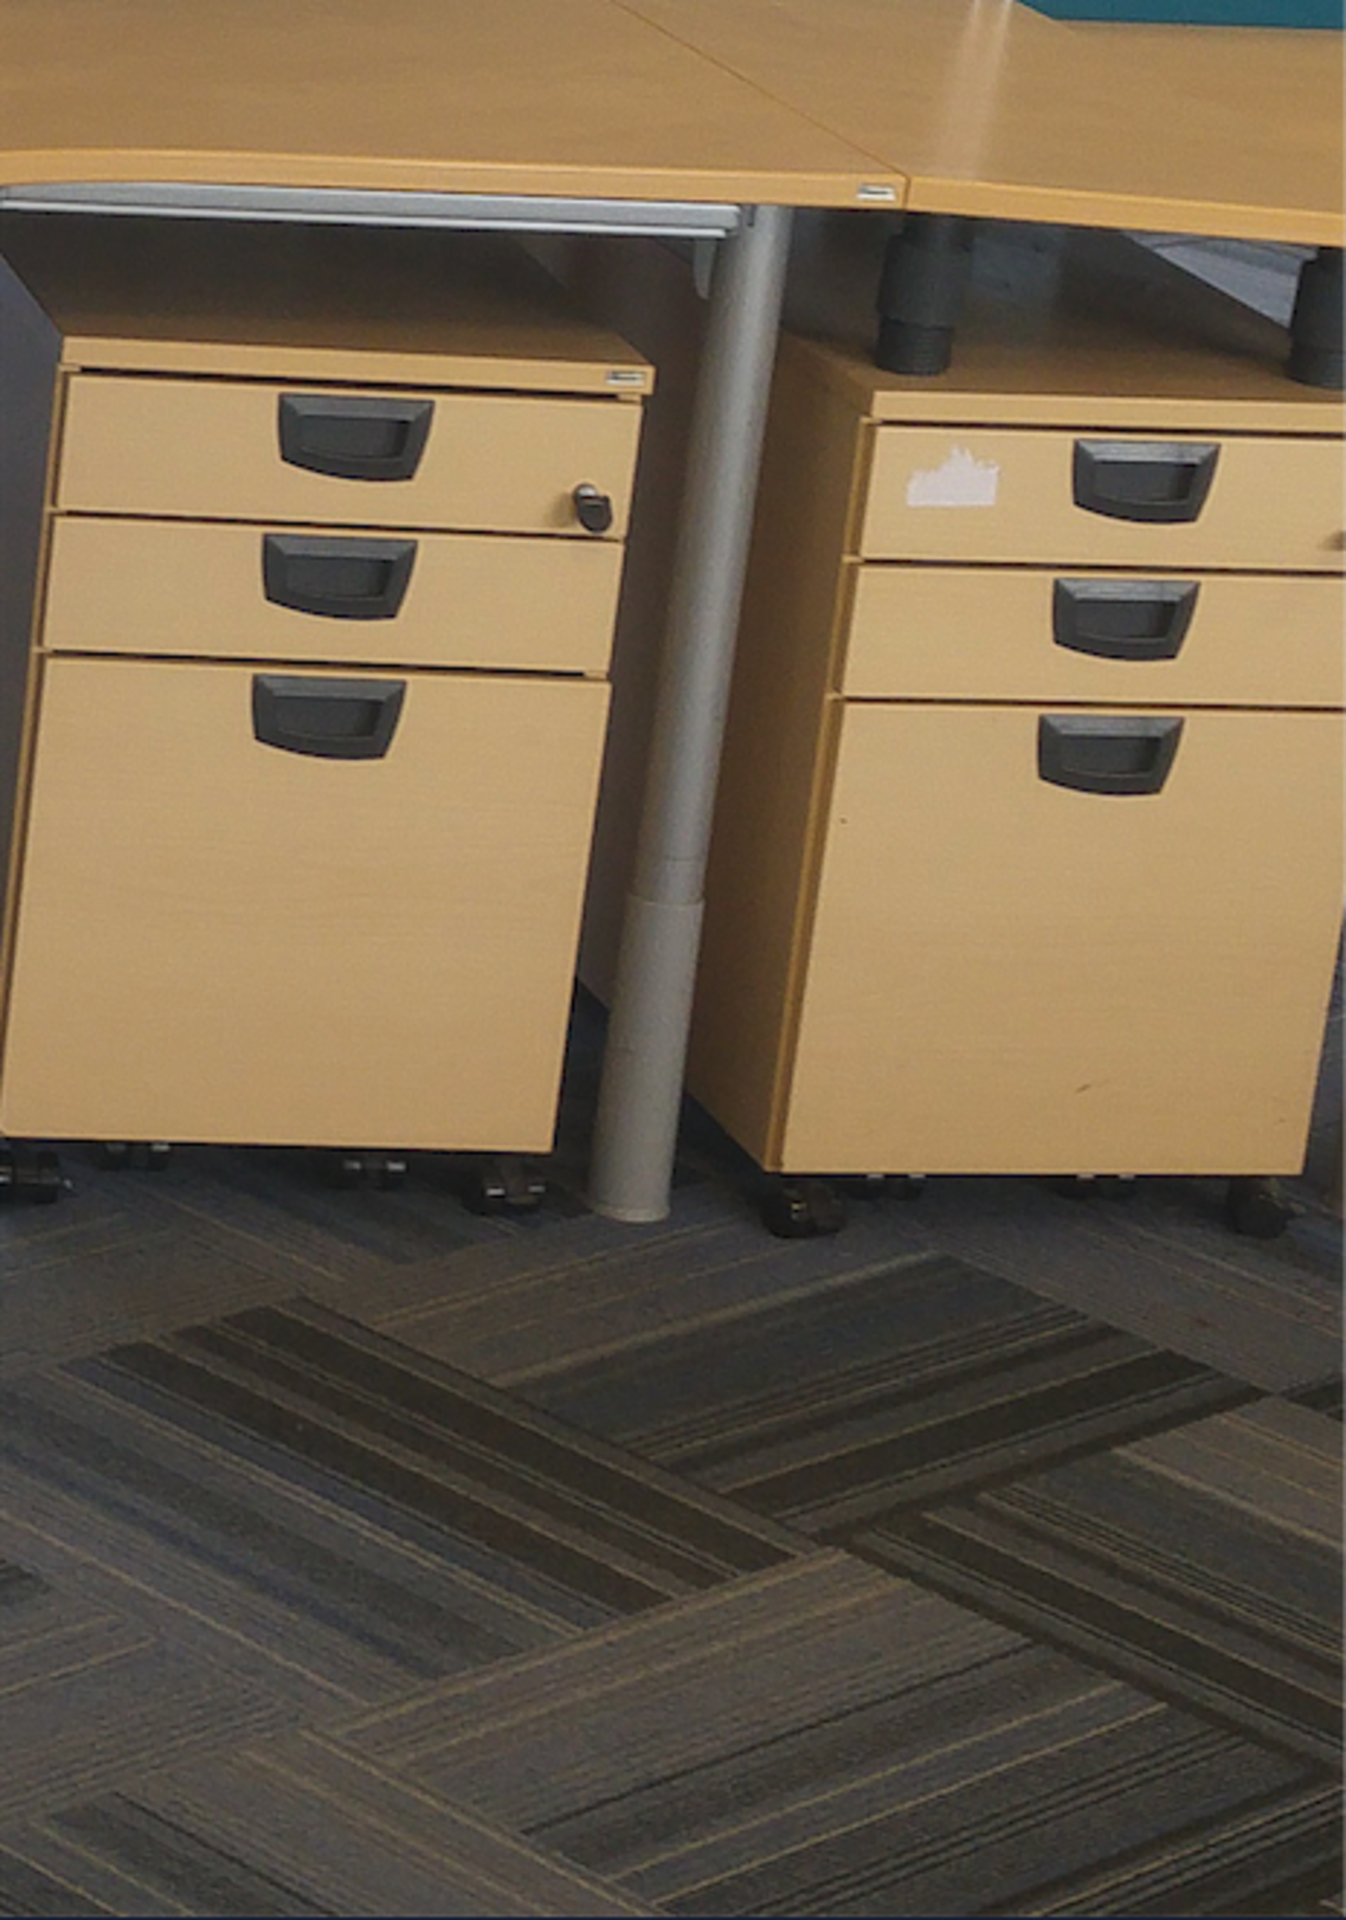 10 x 3 Drawer Under Desk Filing Cabinets on Wheels (with keys)